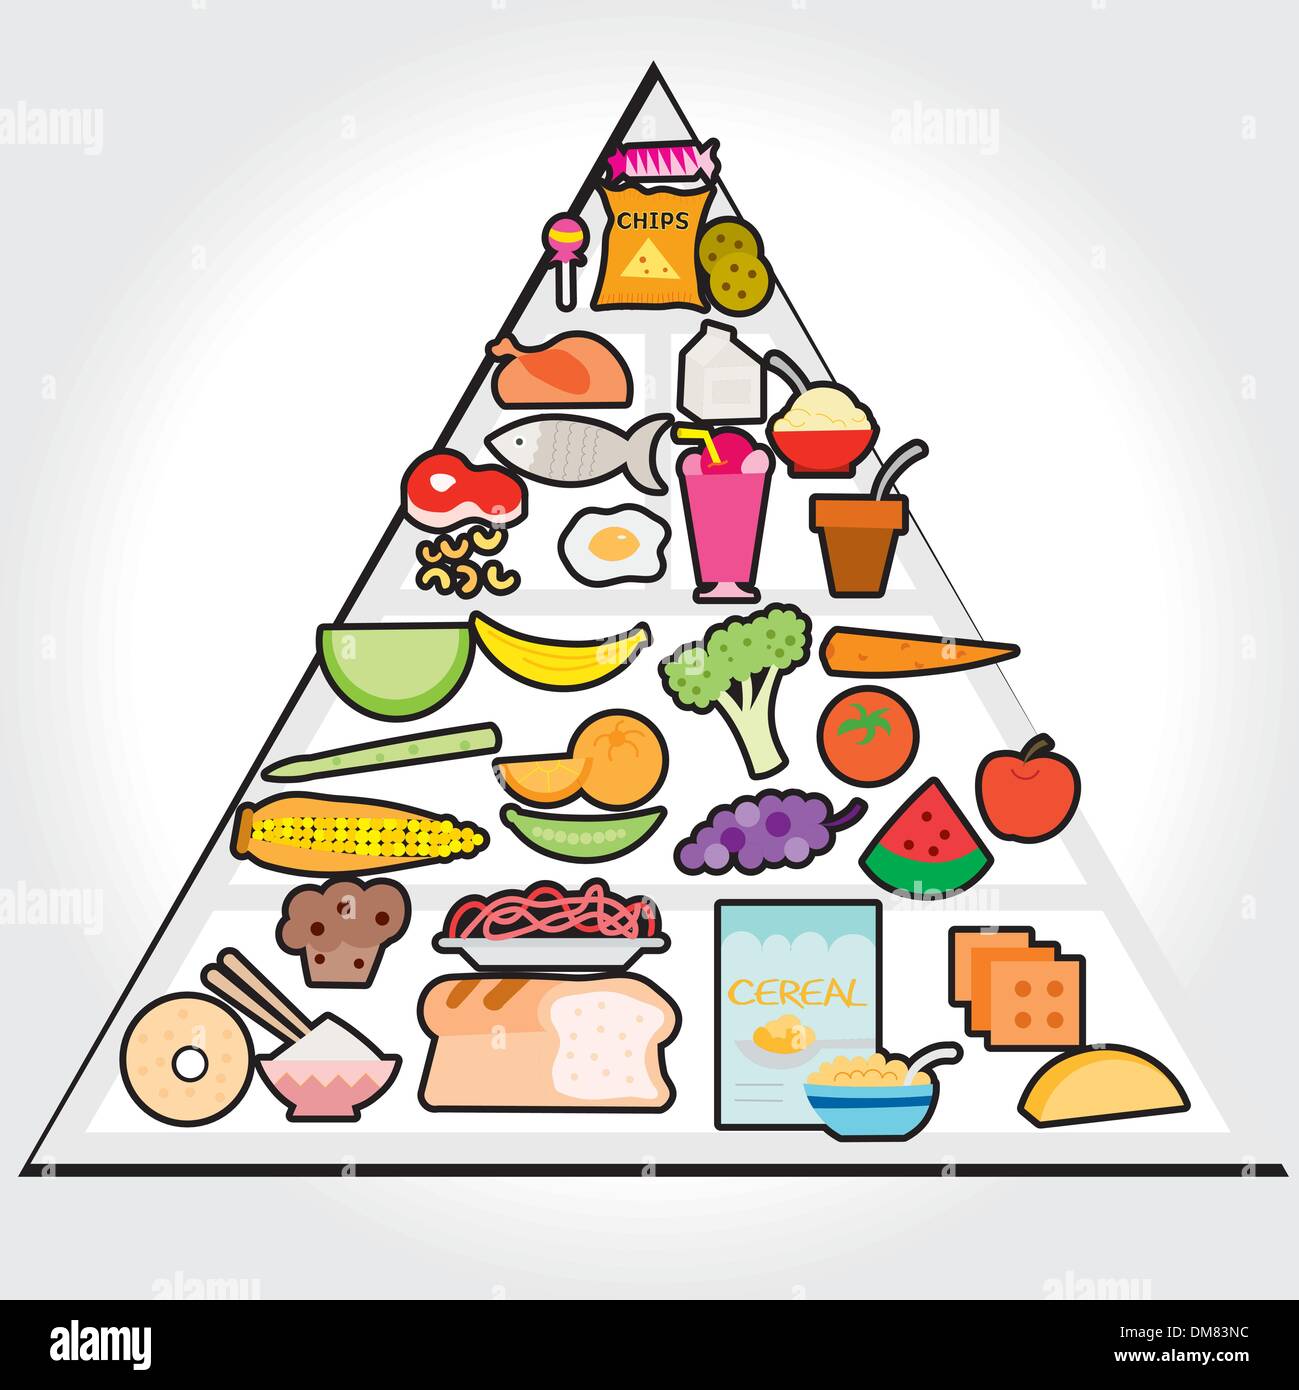 Food guide pyramid. Vector illustration Stock Vector